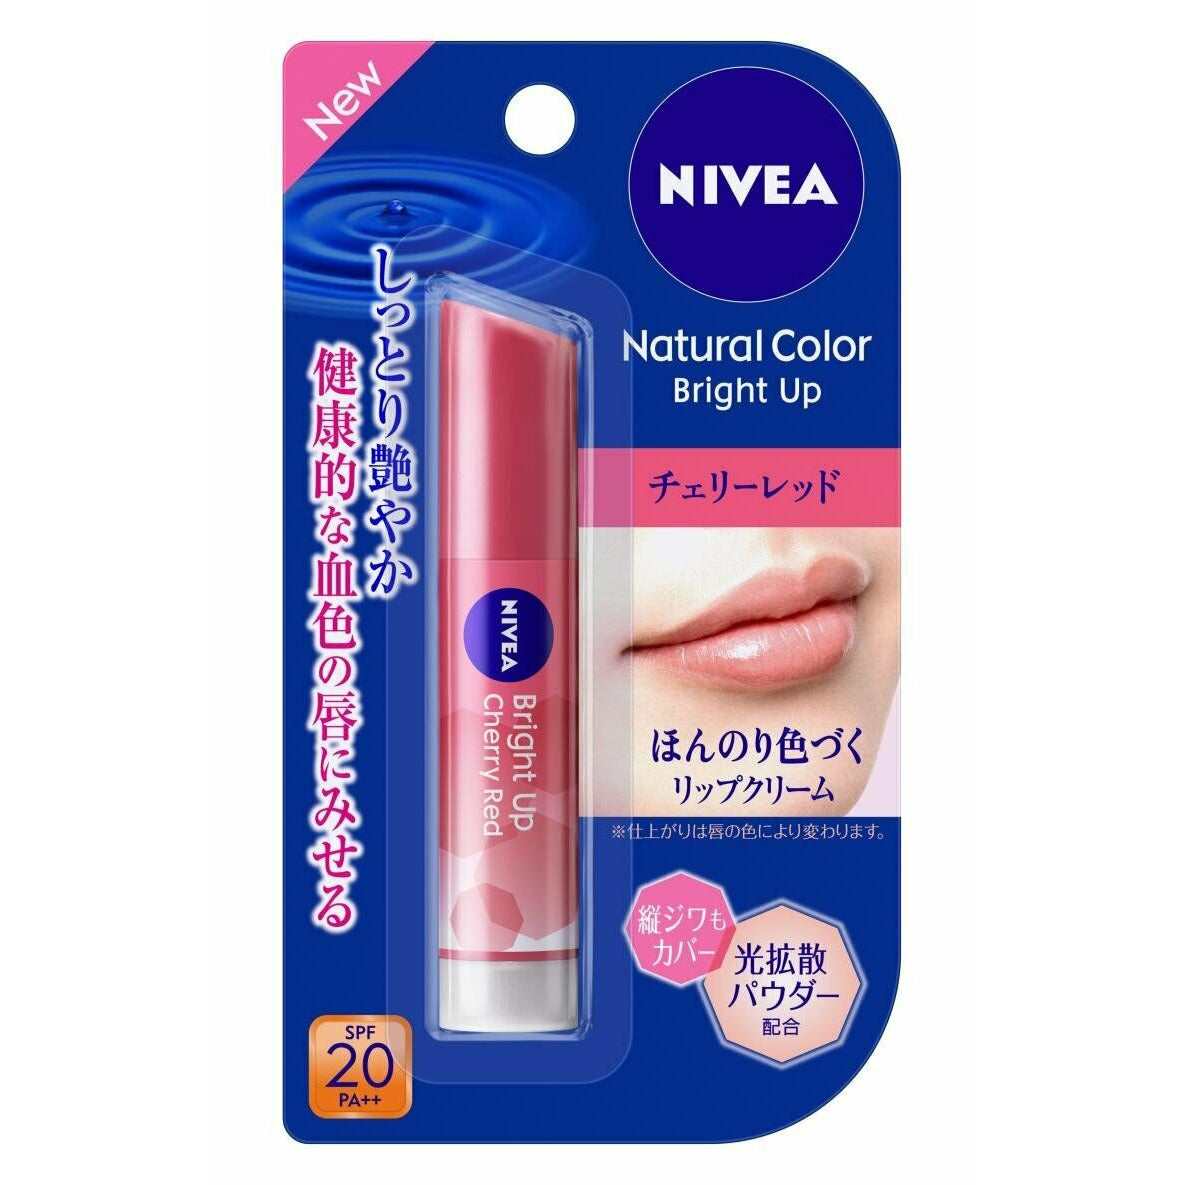 KAO Nivea Natural Color Bright Up Lip Balm 3.5g -Cherry Red SPF20 / PA ++ Japan